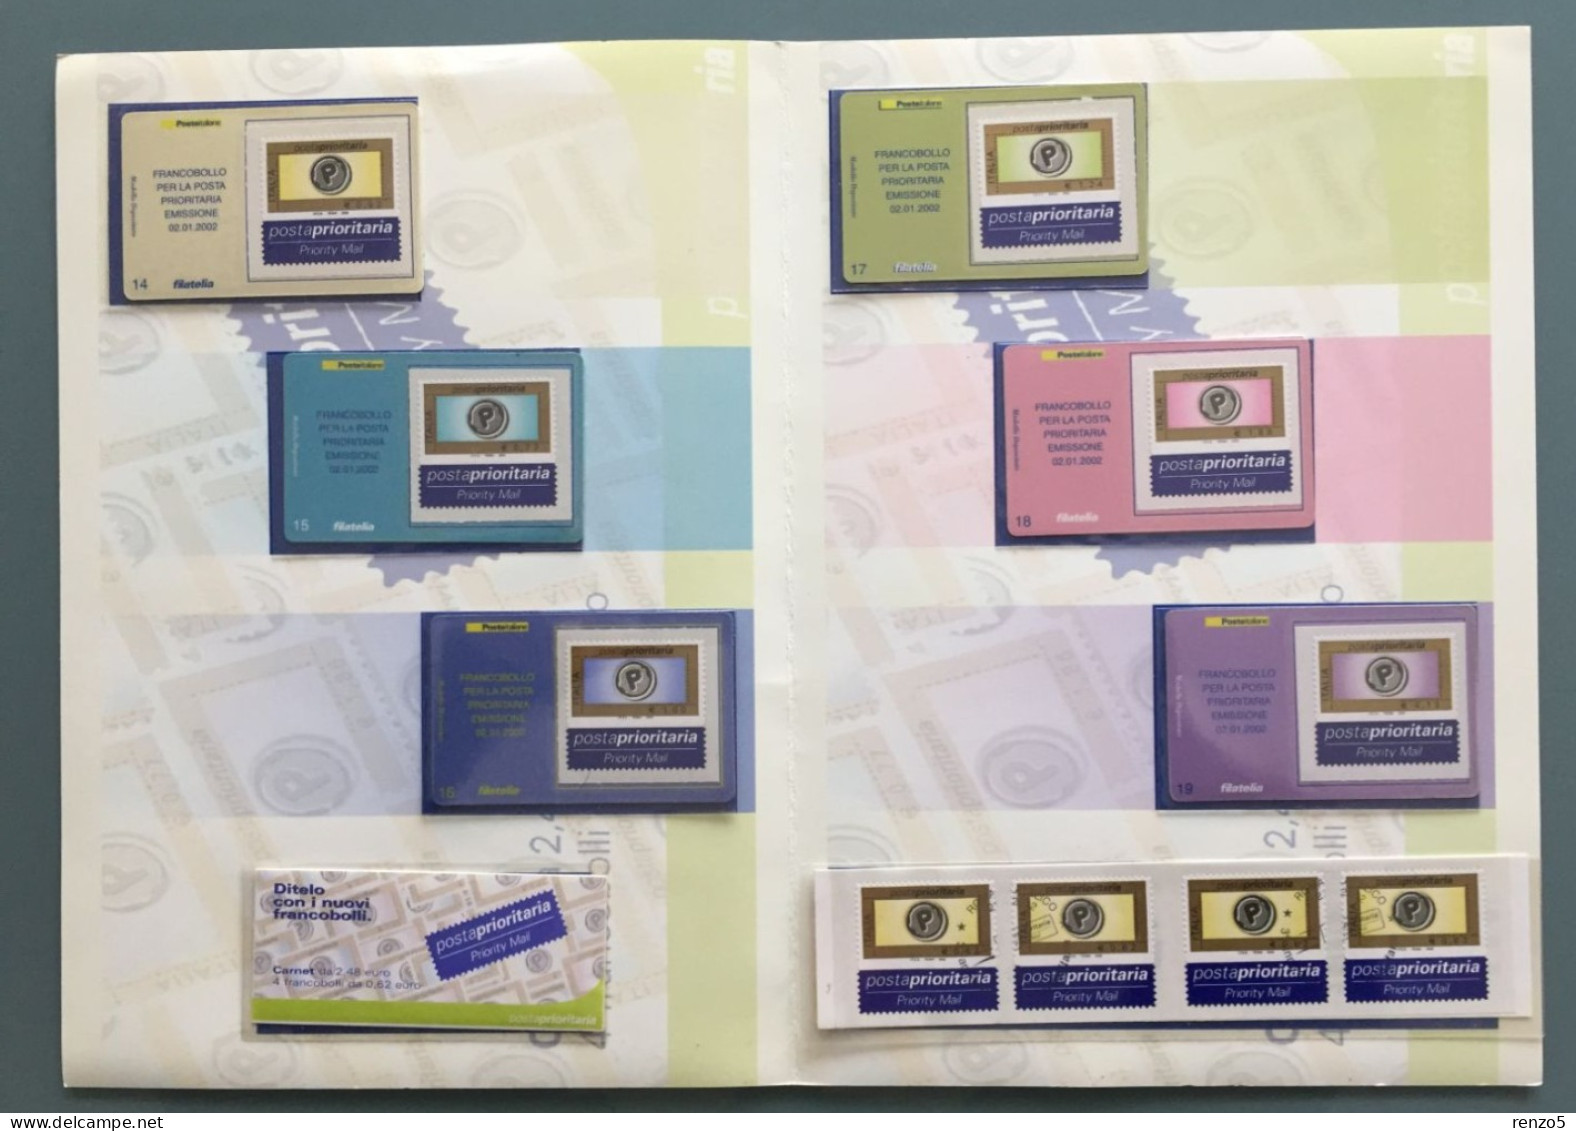 2002 Italia - Folder - Posta Prioritaria E 6 Tessere Filateliche - 18 - Presentation Packs